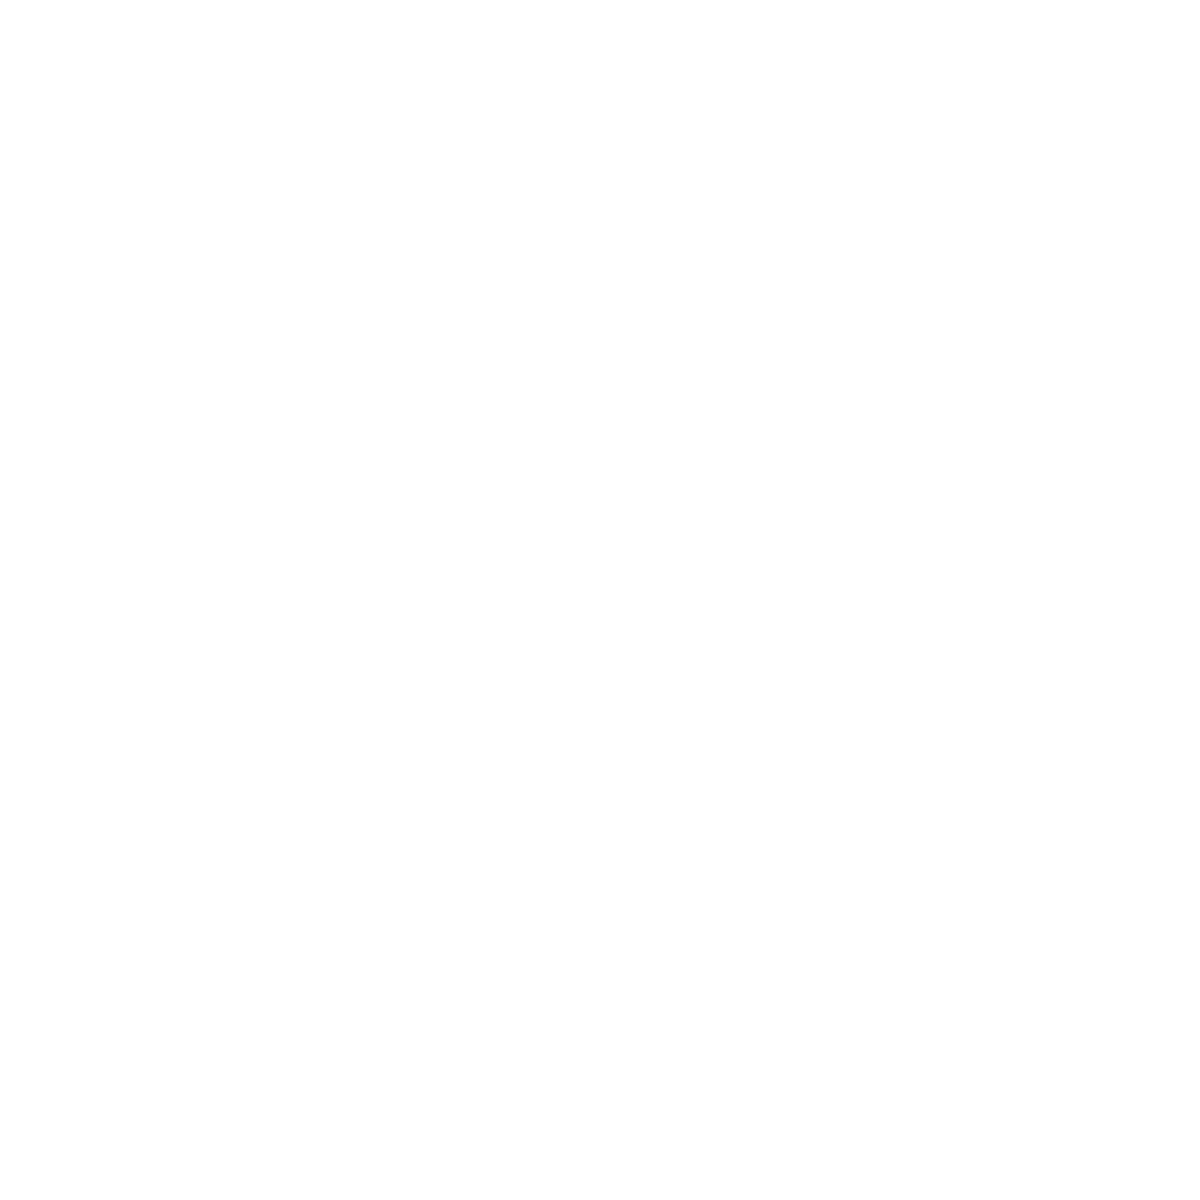 6x6 grid